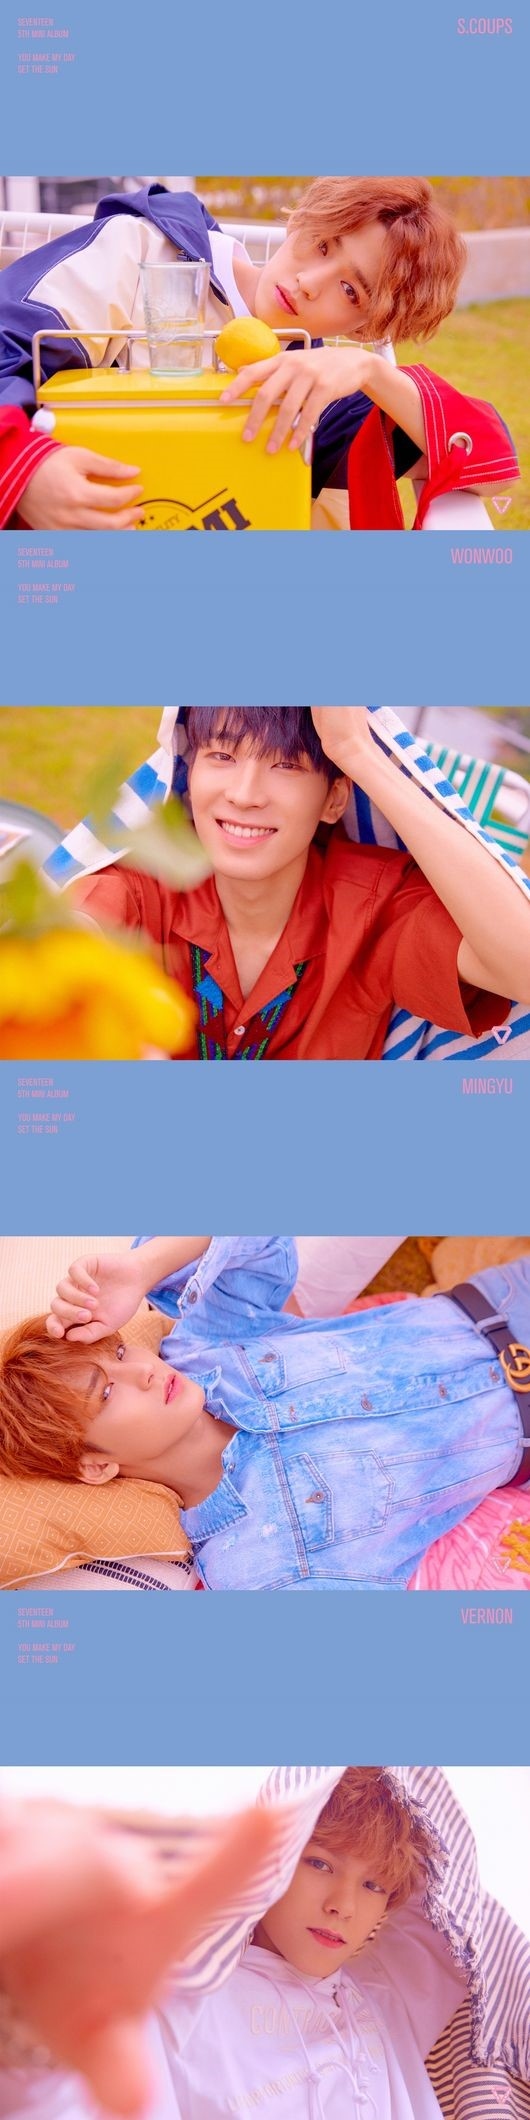 SEVENTEEN スングァン YOU MAKE MY DAY HMV特典 トレカ Seungkwan フォトカード 即決 セブンティーン トレーディングカード 5th Mini Album